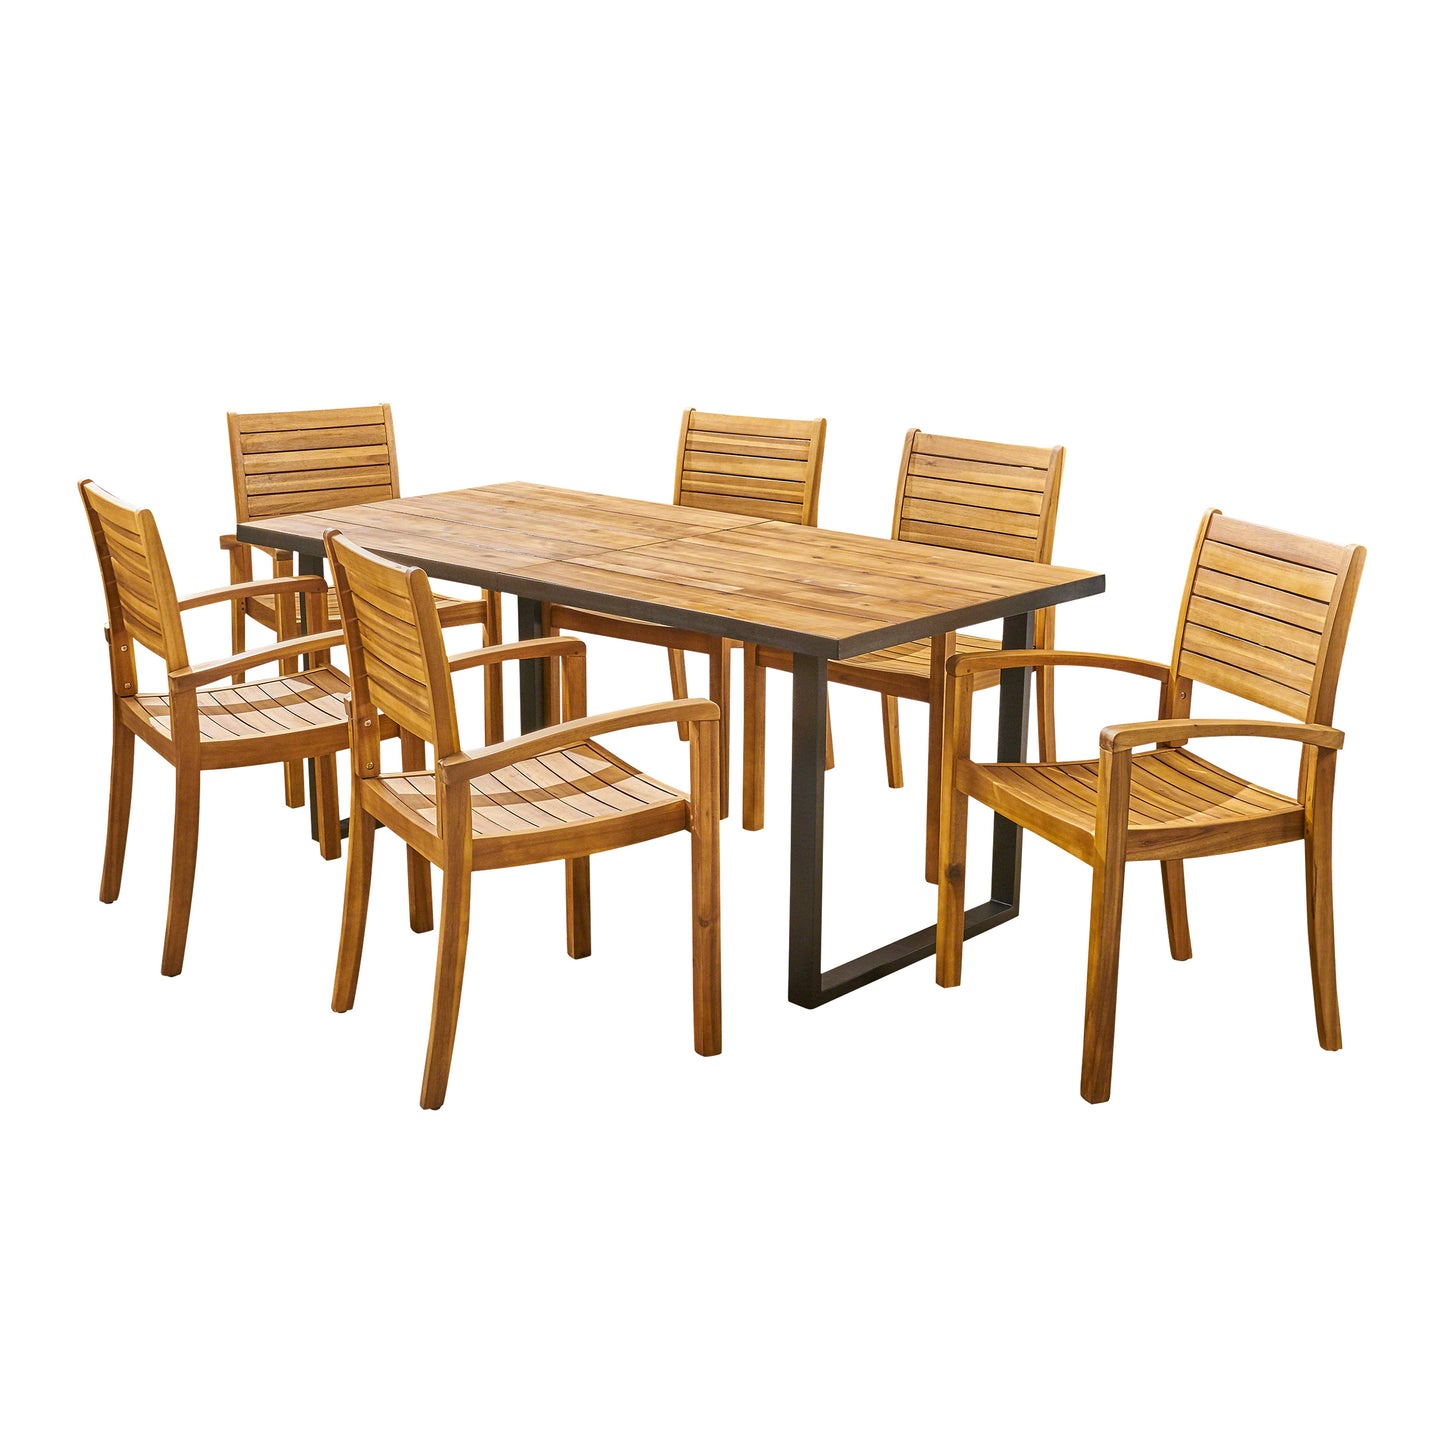 Alderson Outdoor 6-Seater Rectangular Acacia Wood Dining Set, Teak and Black